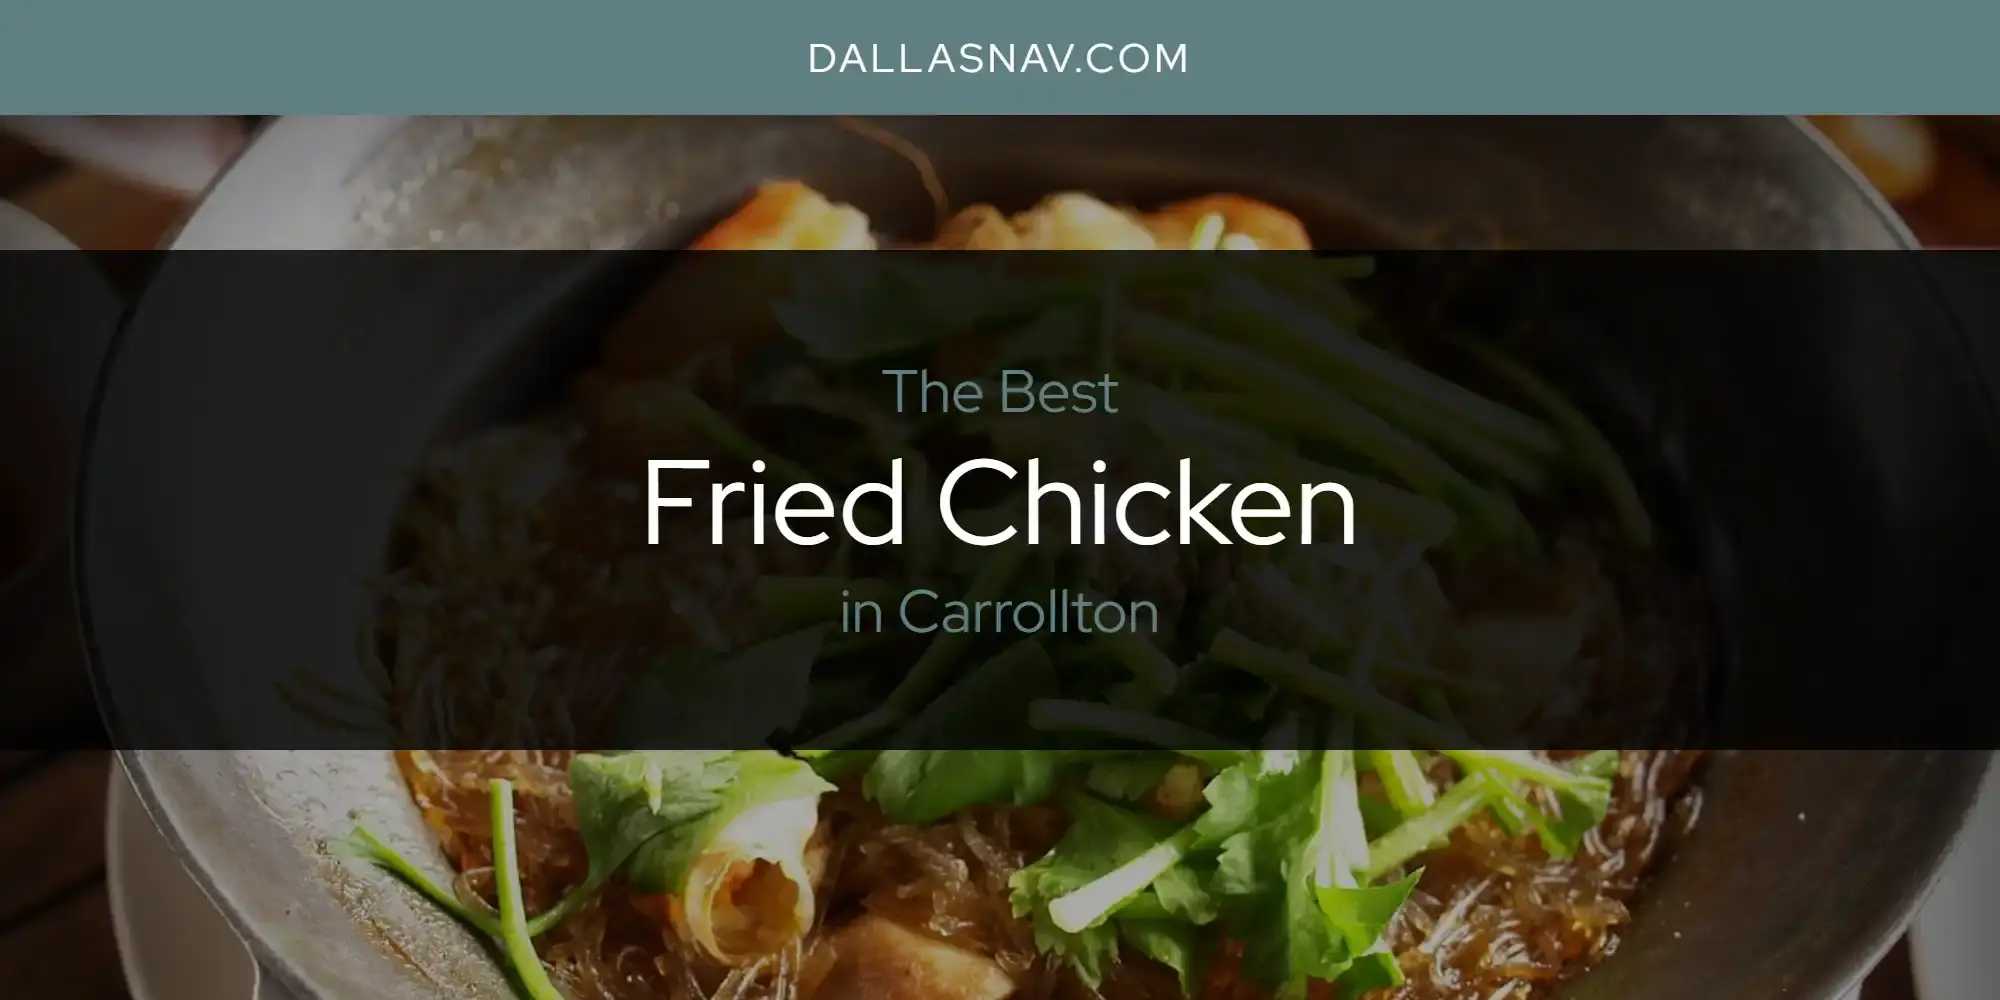 Best Fried Chicken in Carrollton? Here's the Top 6